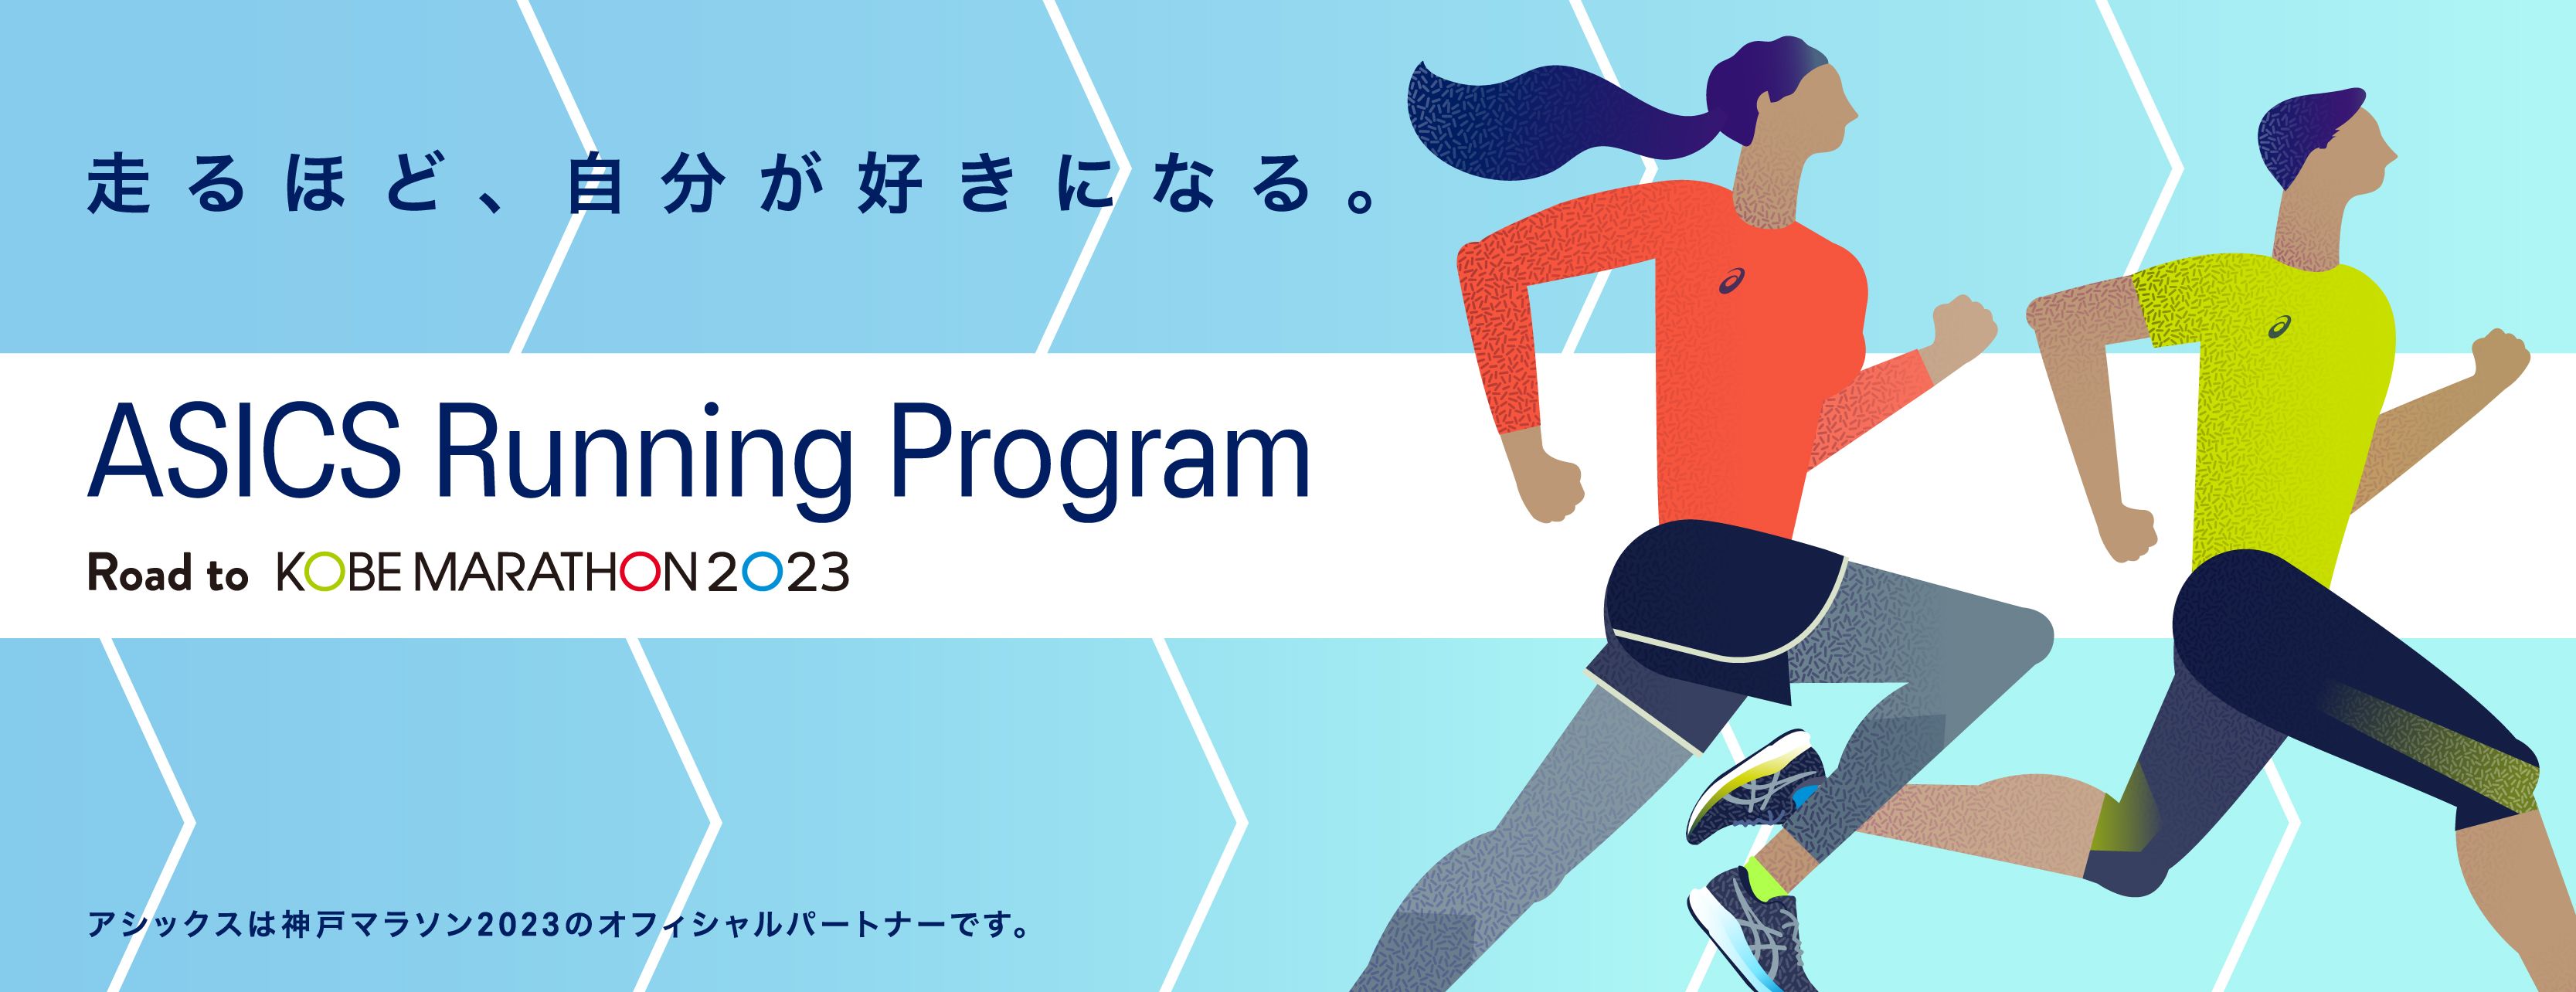 ASICS Running Program Road to 神戸マラソン2023 KV